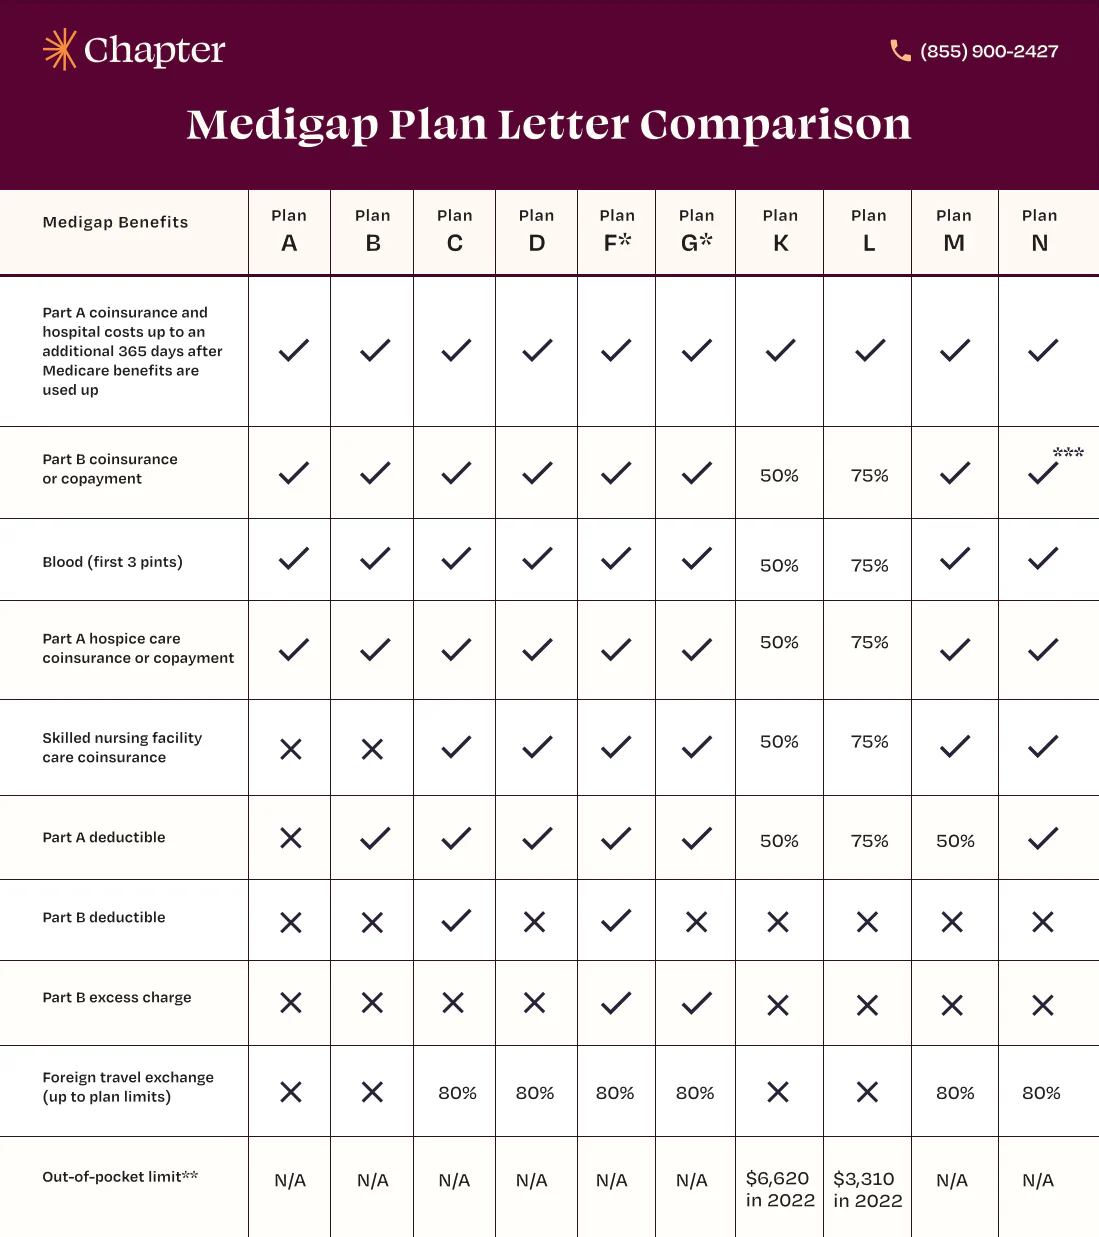 Medigap plan comparisons